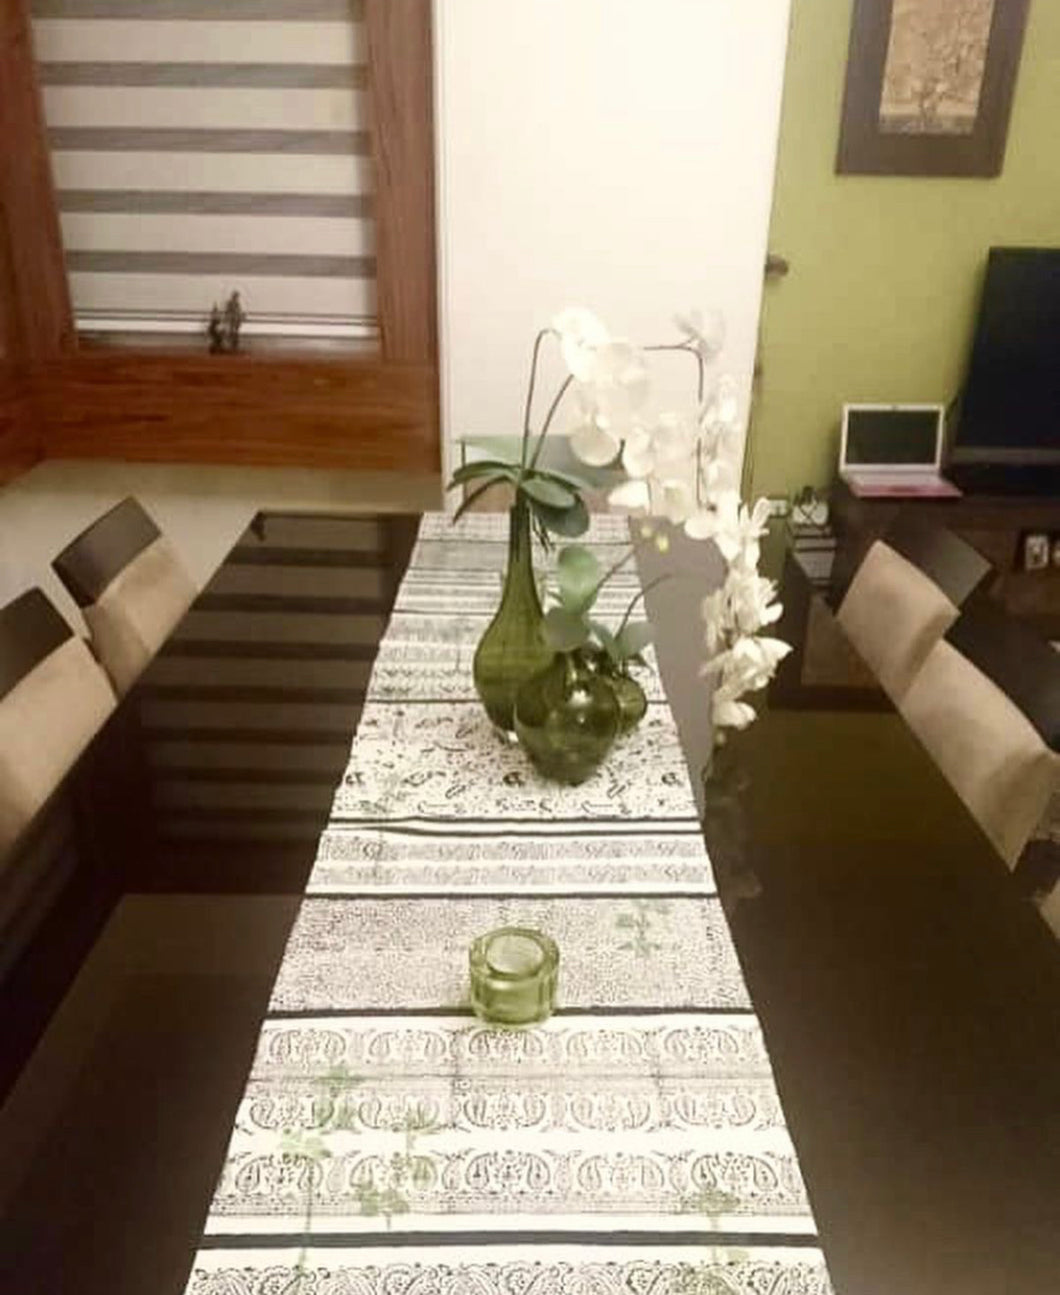 Pasargad Hand-made Green flower Table Runner